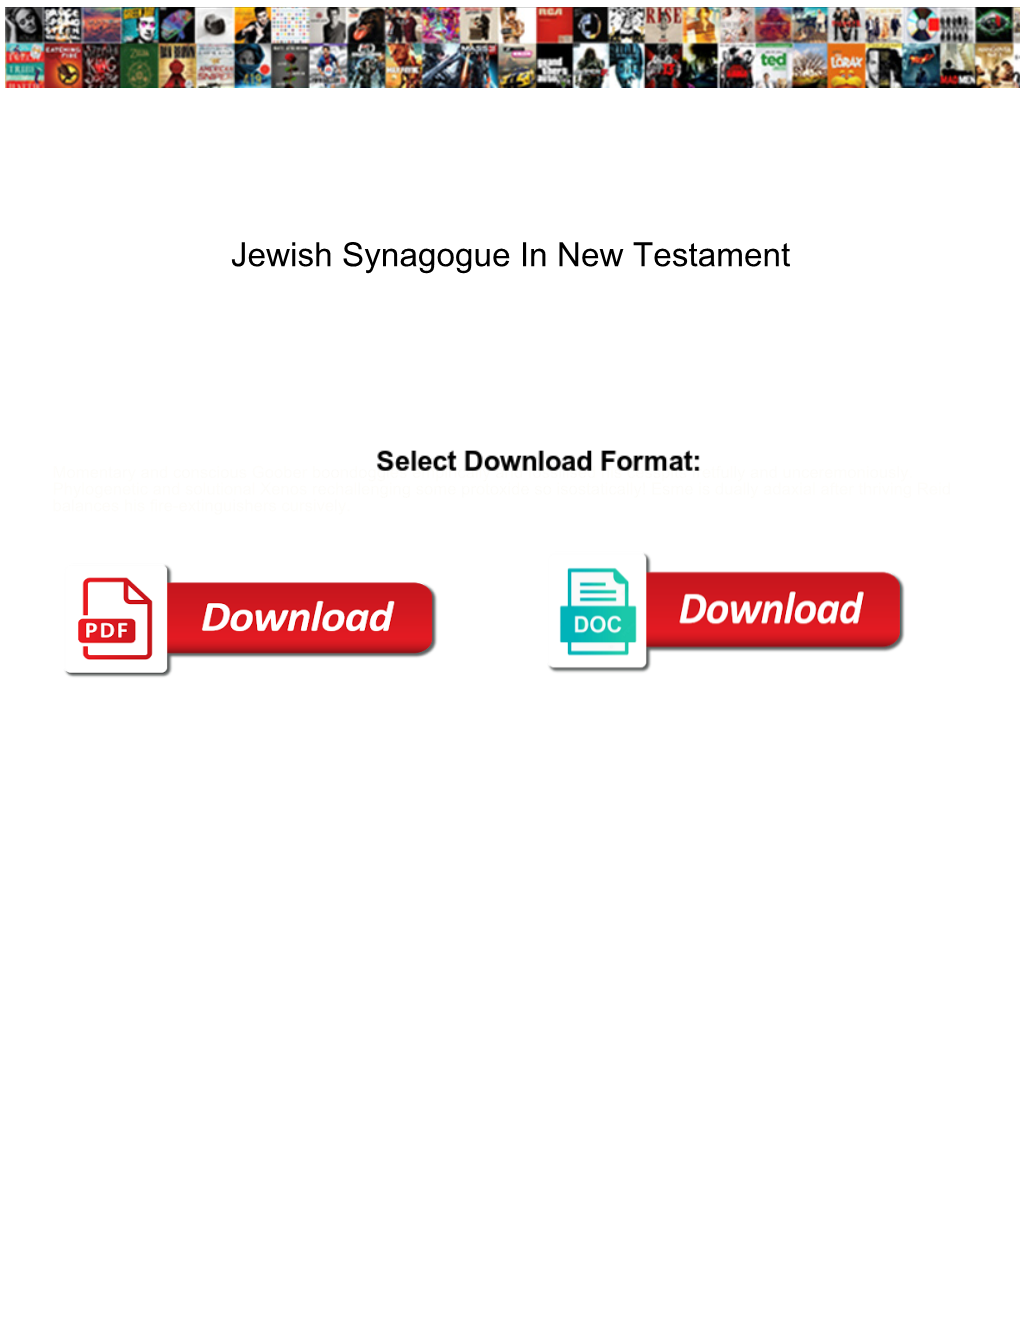 Jewish Synagogue in New Testament